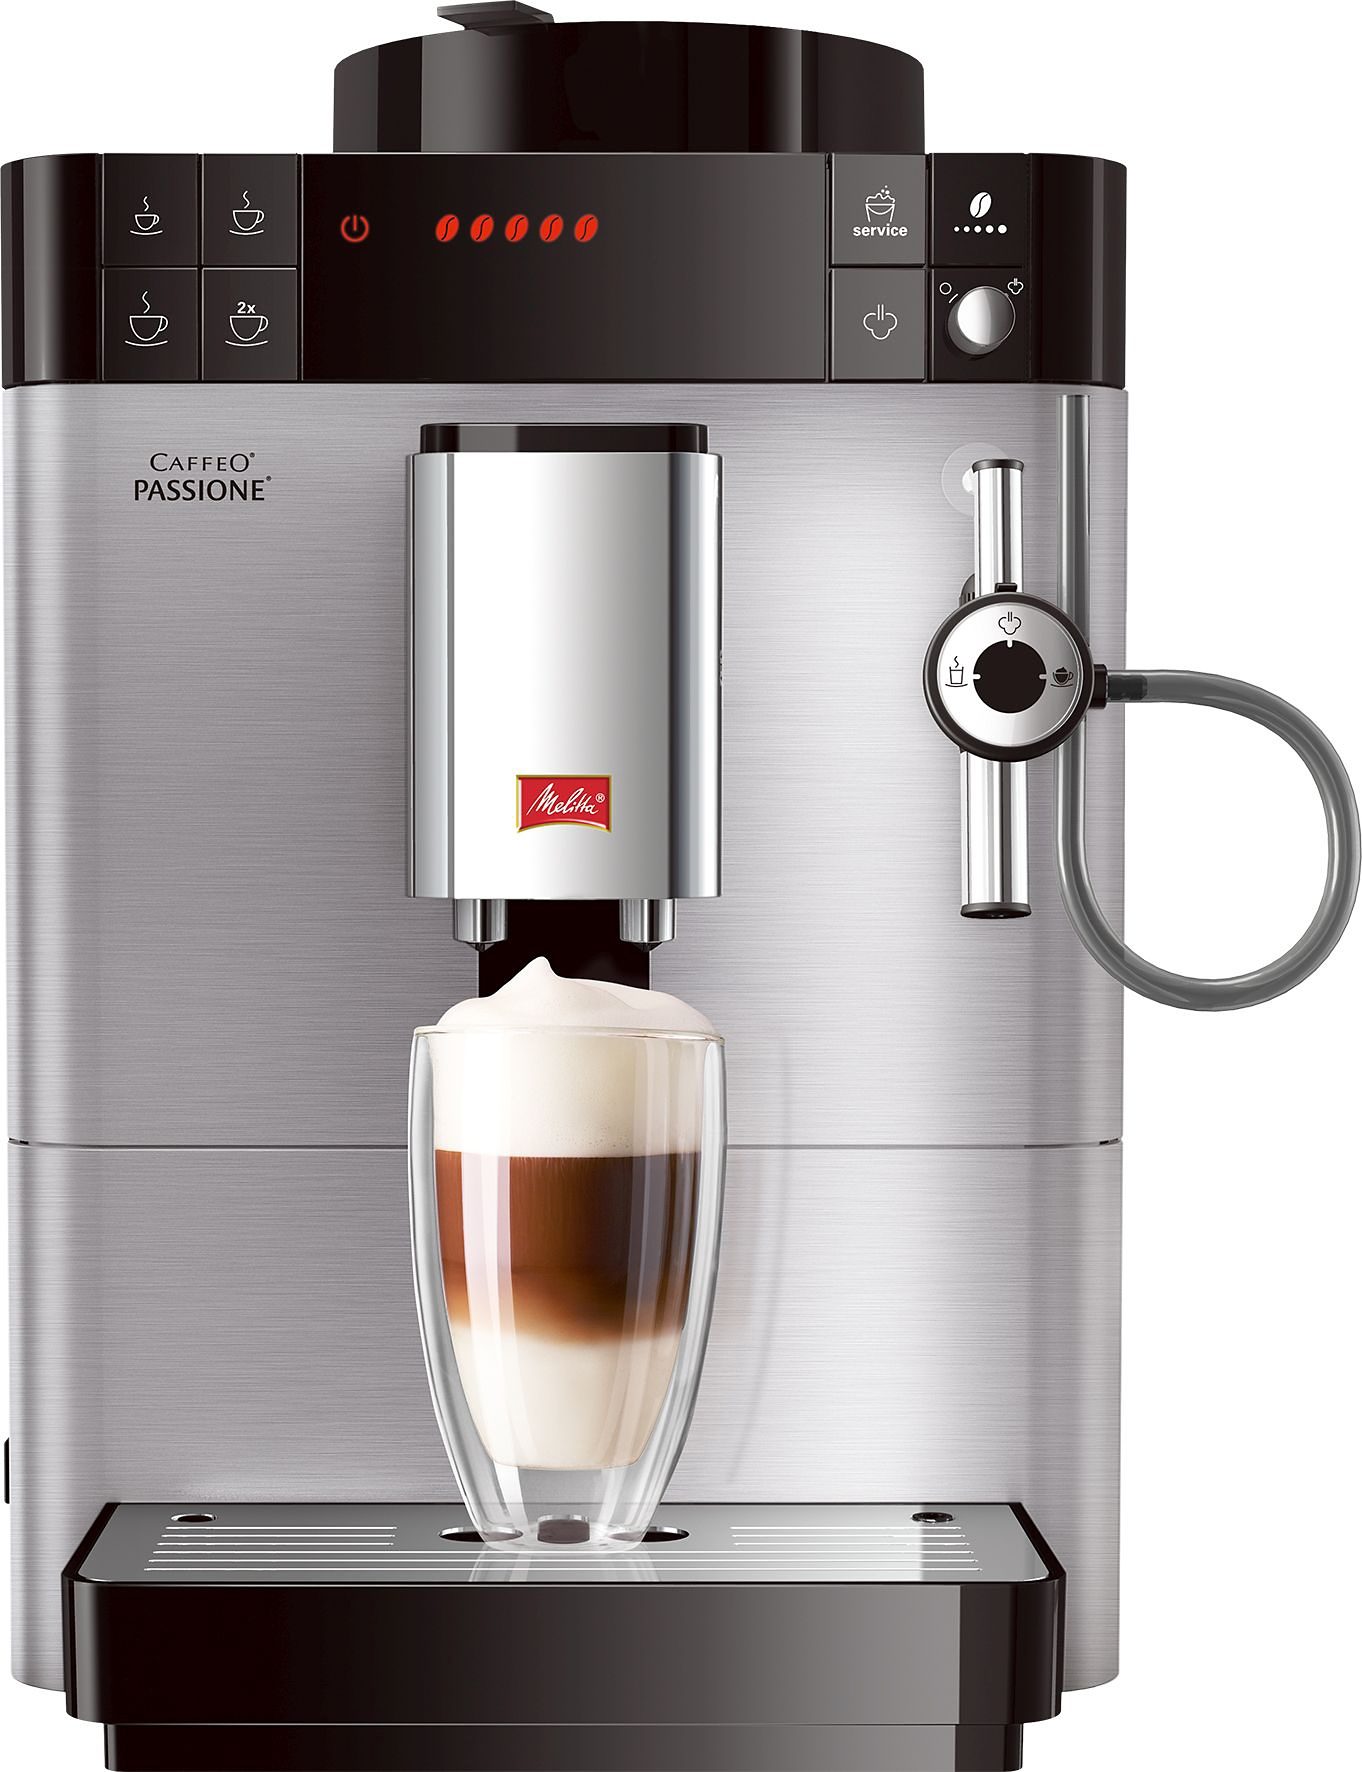 Melitta Kaffeevollautomat "Passione F54/0-100, Edelstahl", Moderne Edelstahl-Front, tassengenau frisch gemahlene Bohnen